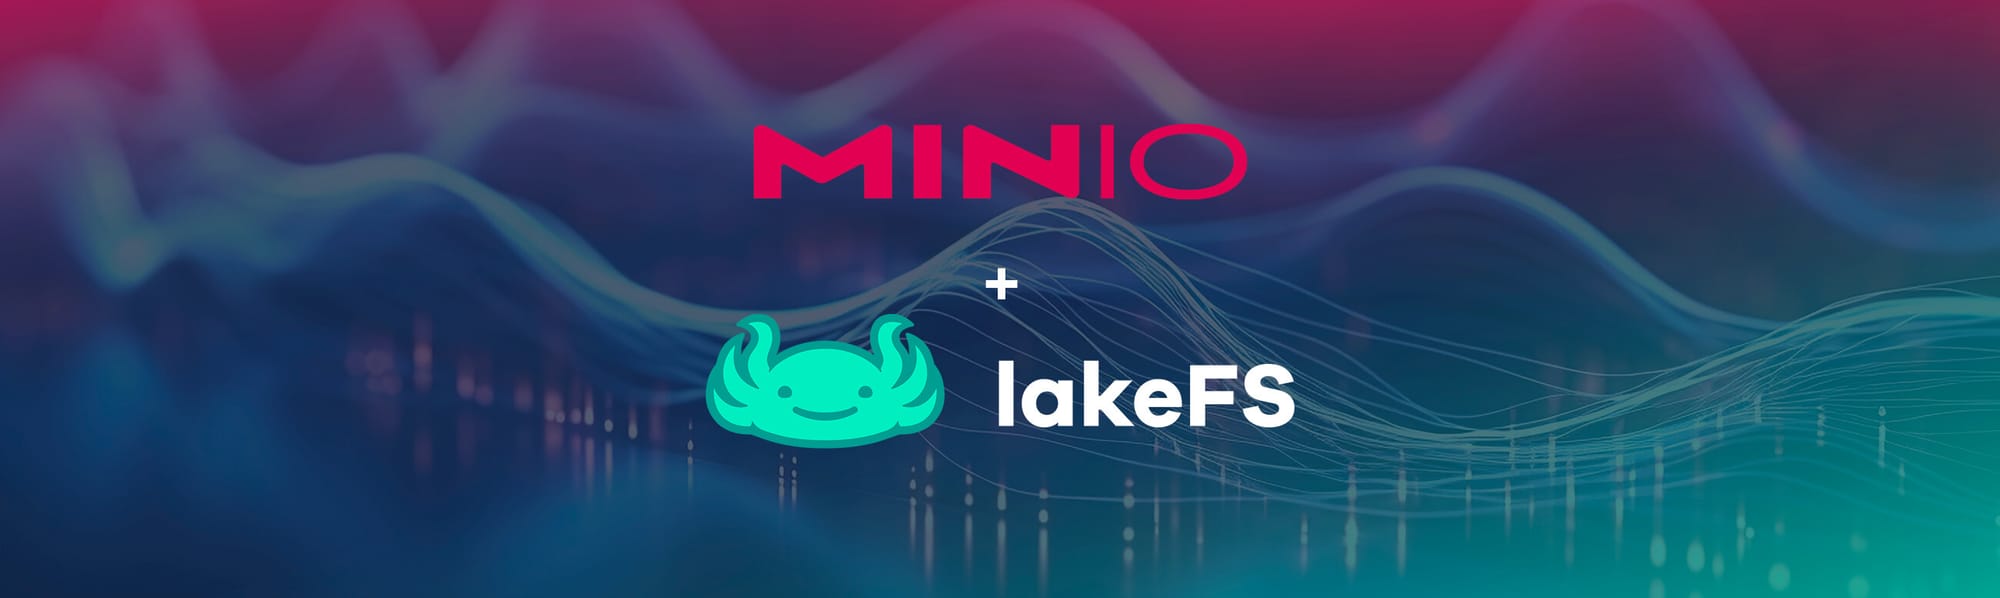 AI/ML Reproducibility with lakeFS and MinIO